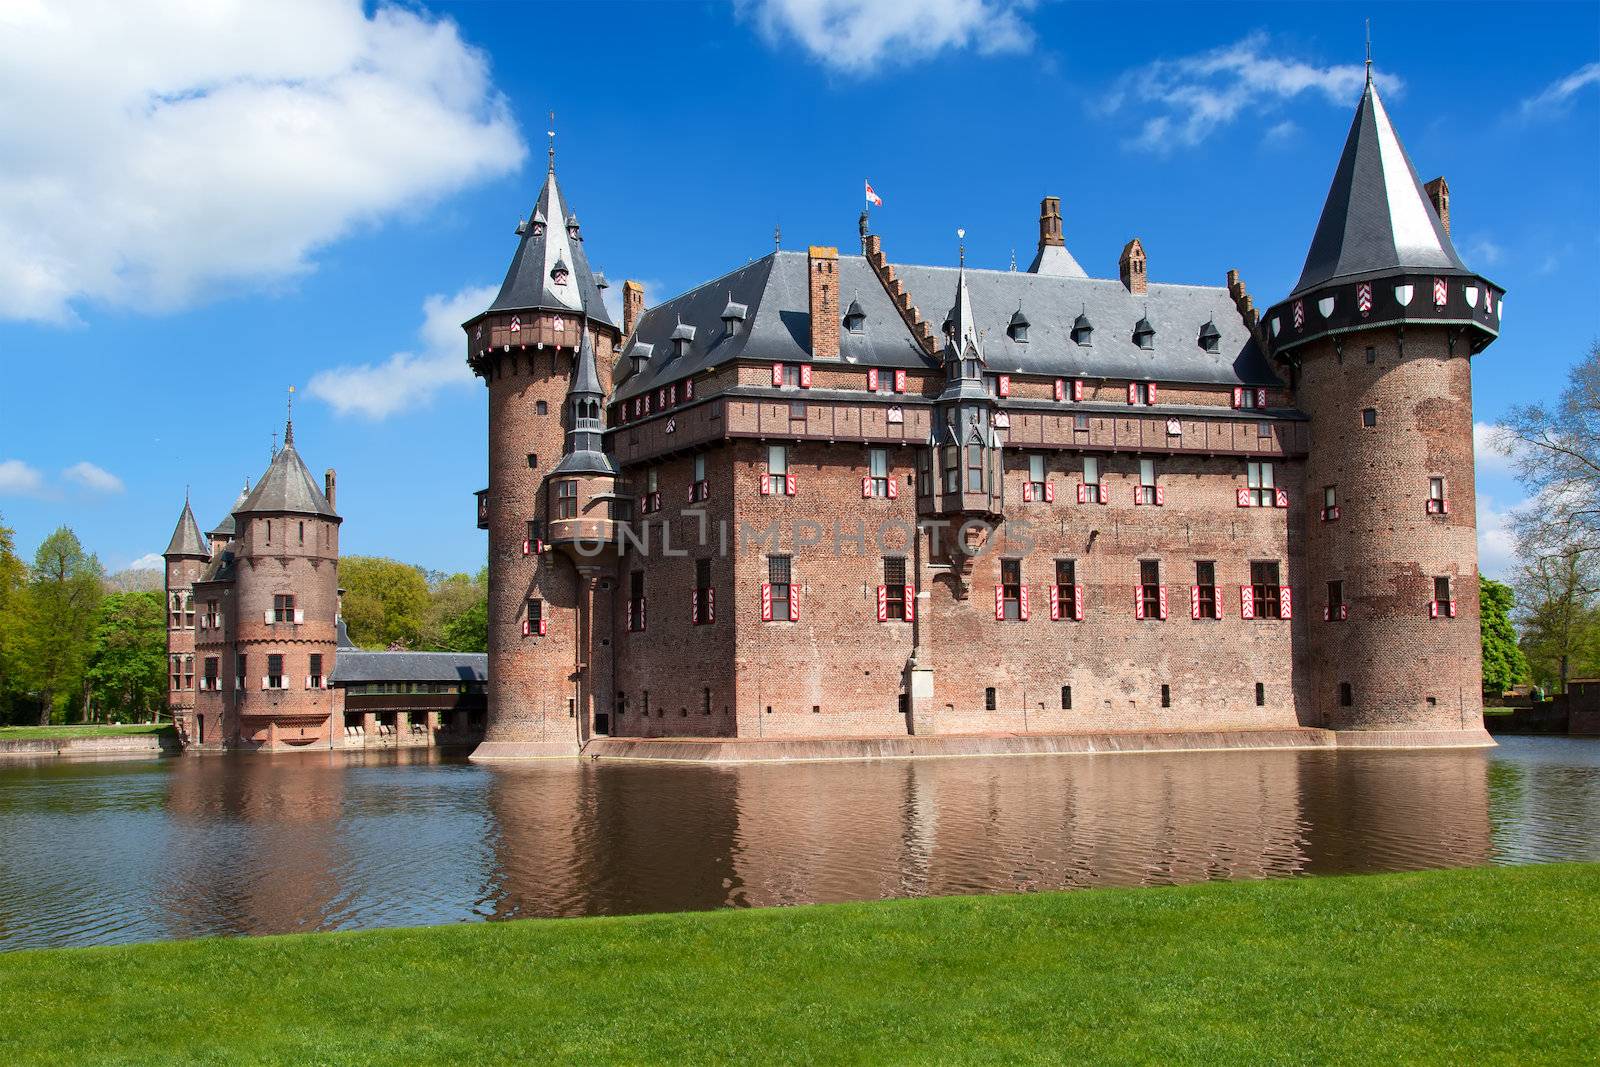 Ancient De Haar castle near Utrecht, Netherlands